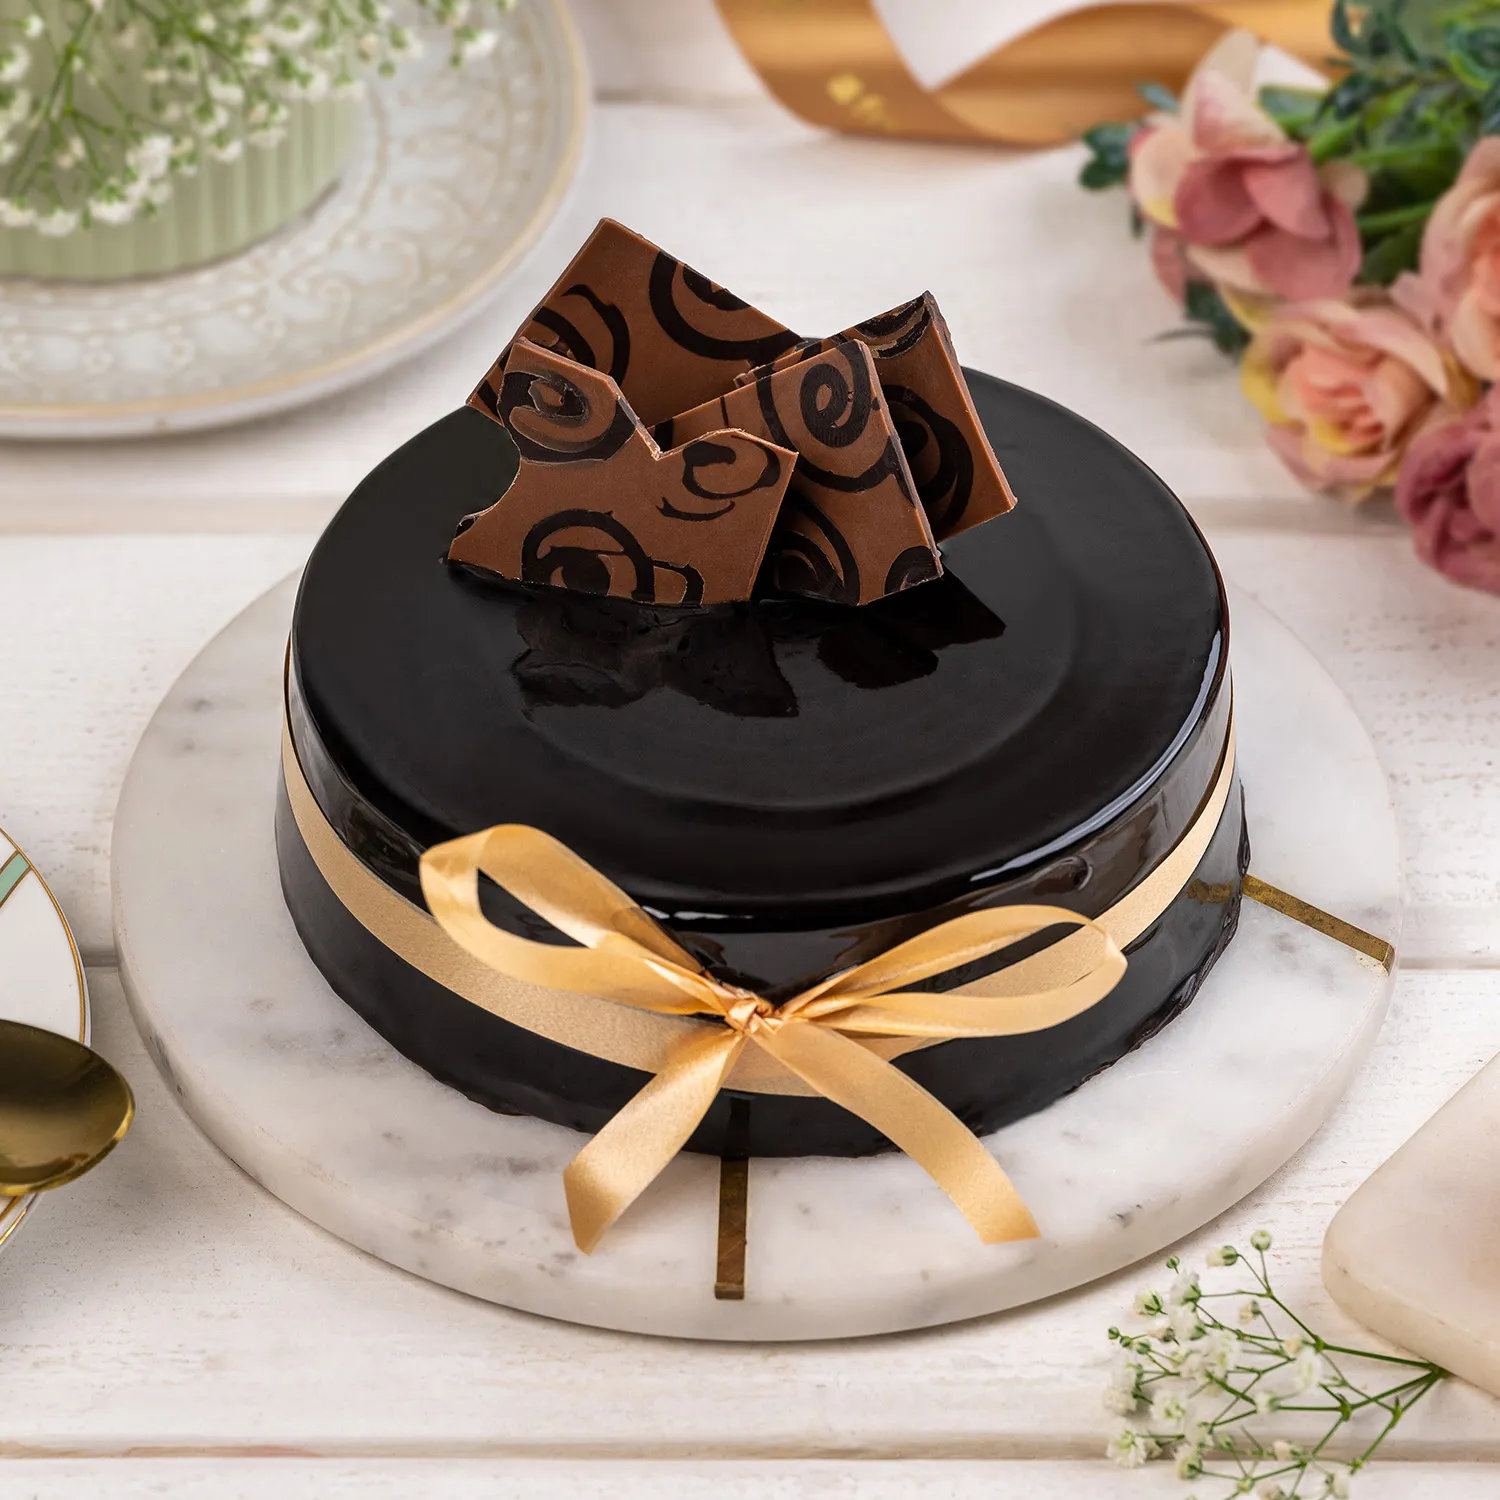 Decorated Chocolate Truffle Cake - 2 KG